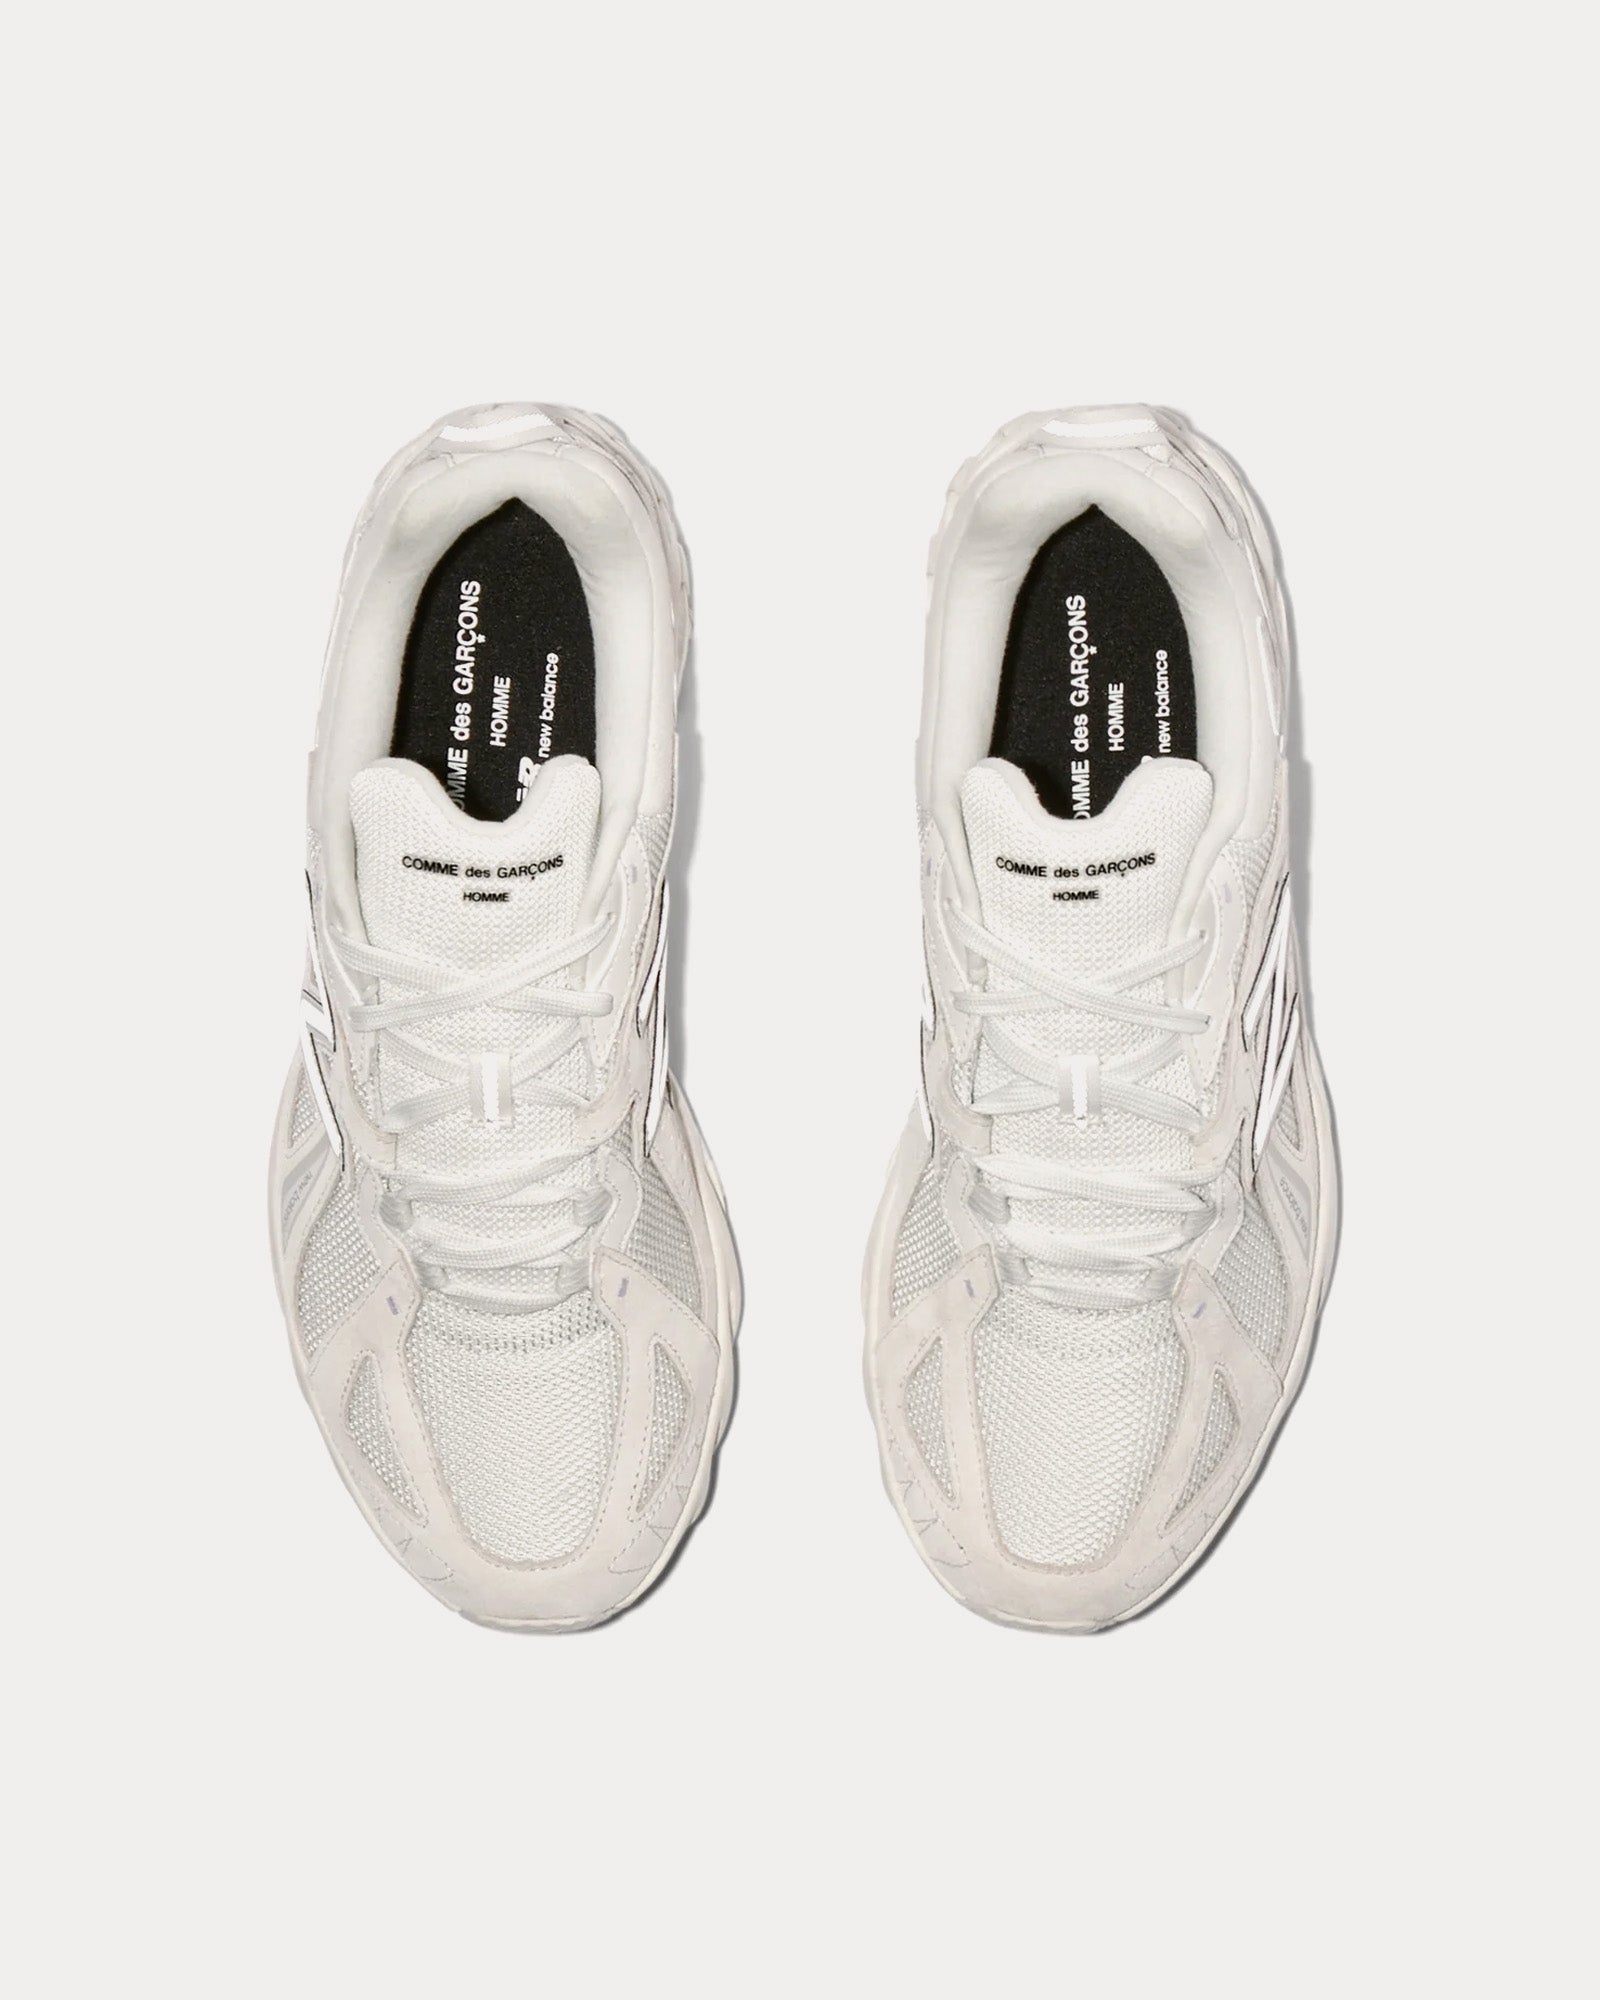 New Balance x Comme des Garçons Homme - 610 White Low Top Sneakers